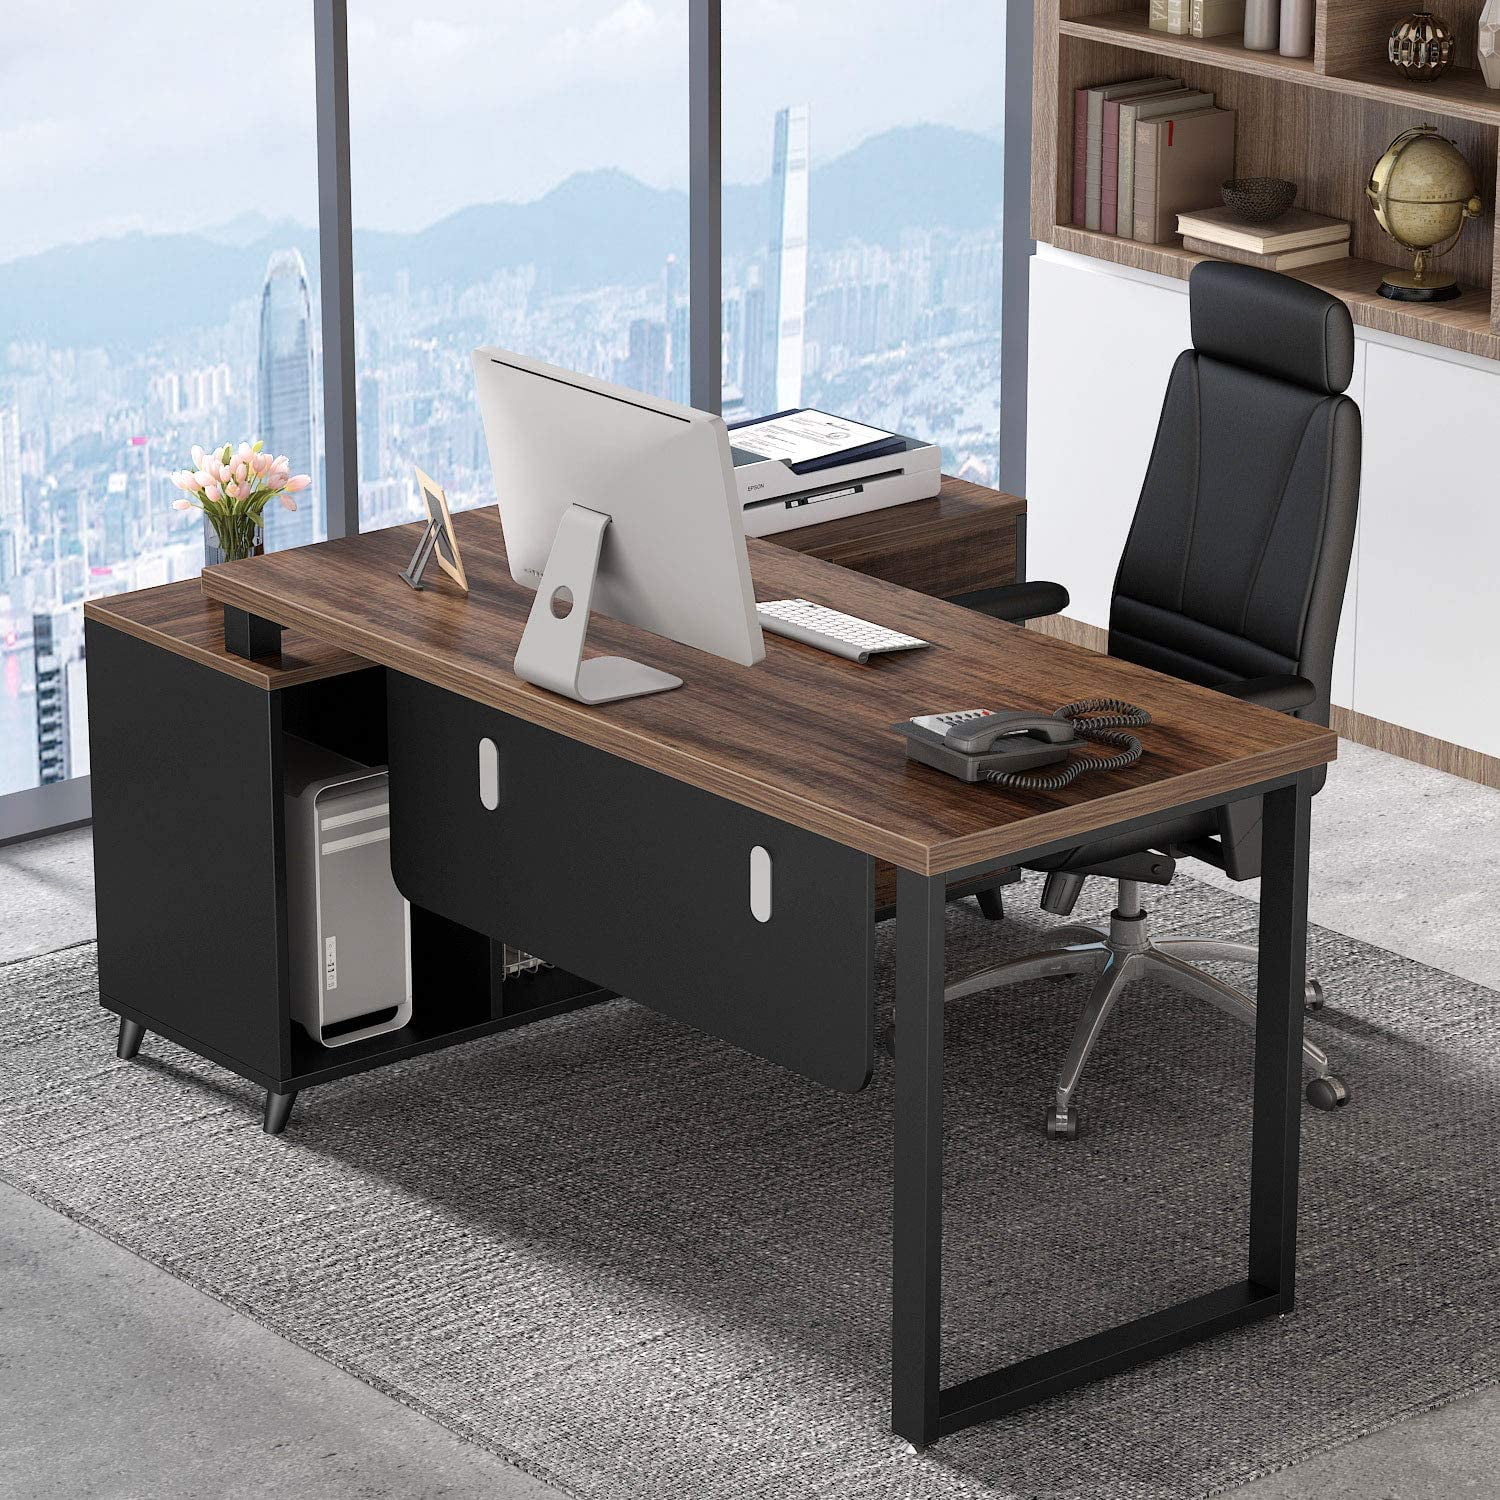 L shaped executive desk